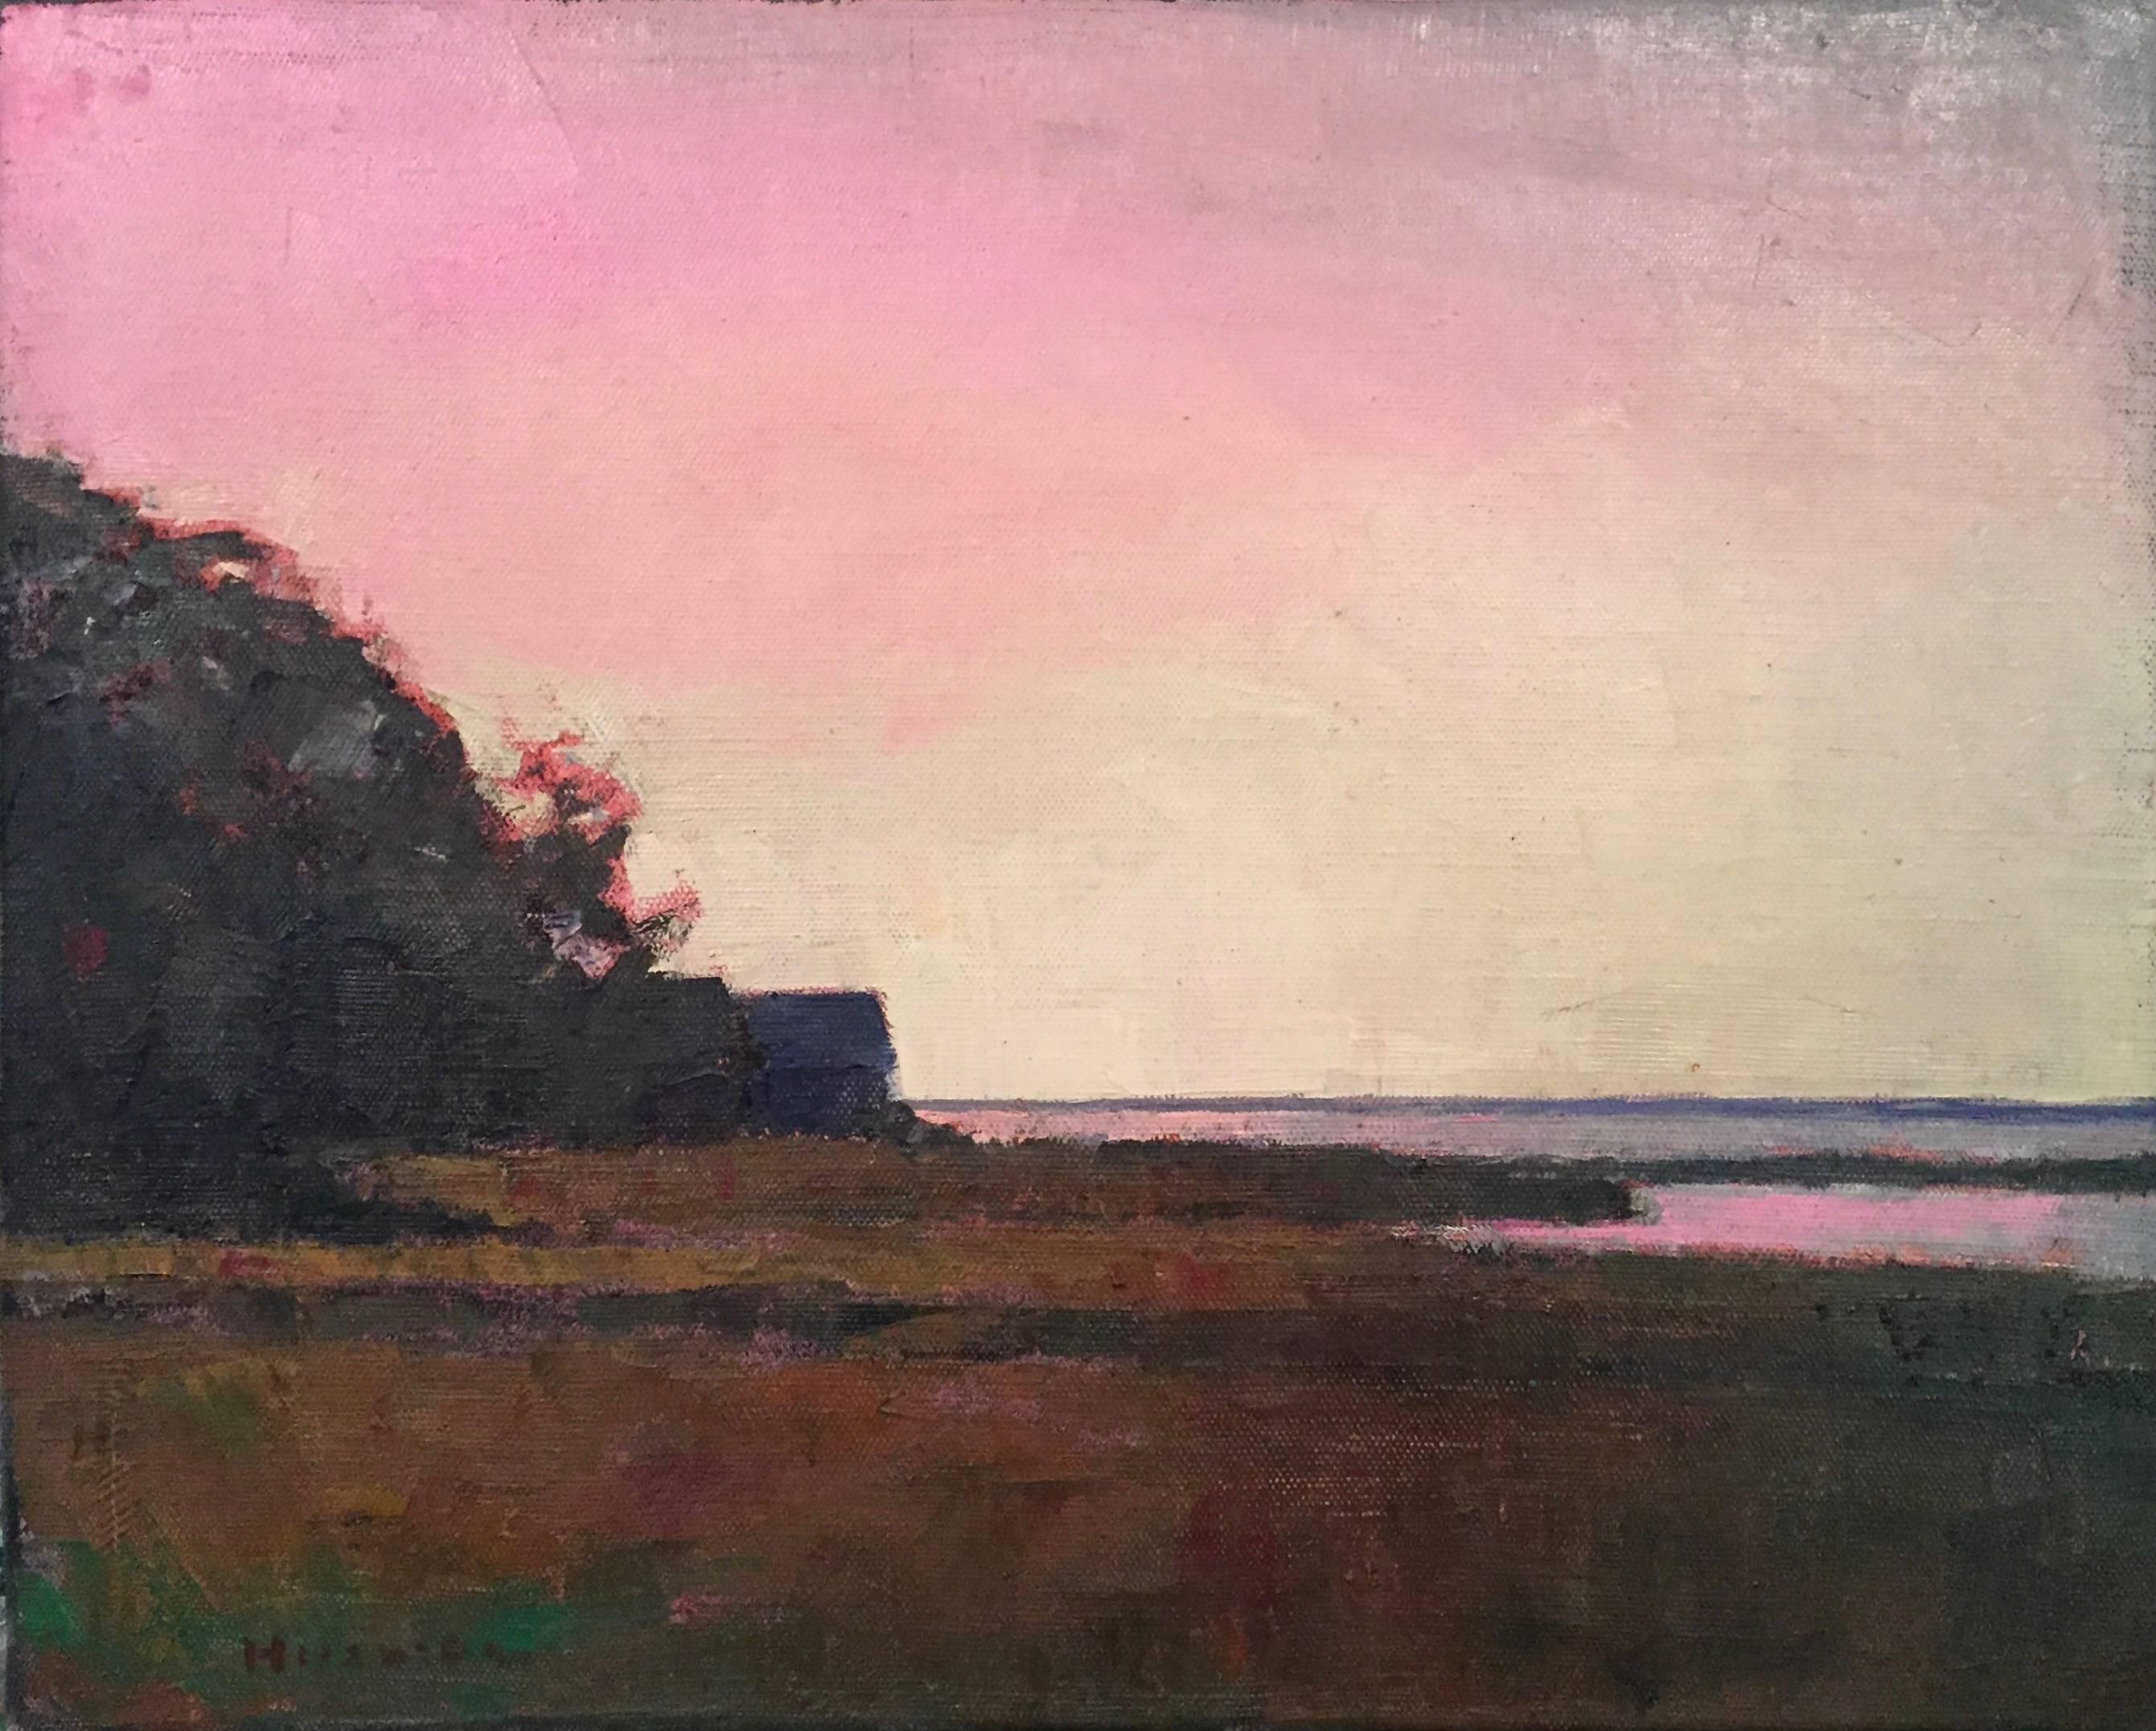 Larry Horowitz Landscape Painting - "Crimson Dusk" Pink and Yellow Sunset Sky with Dark Foreground